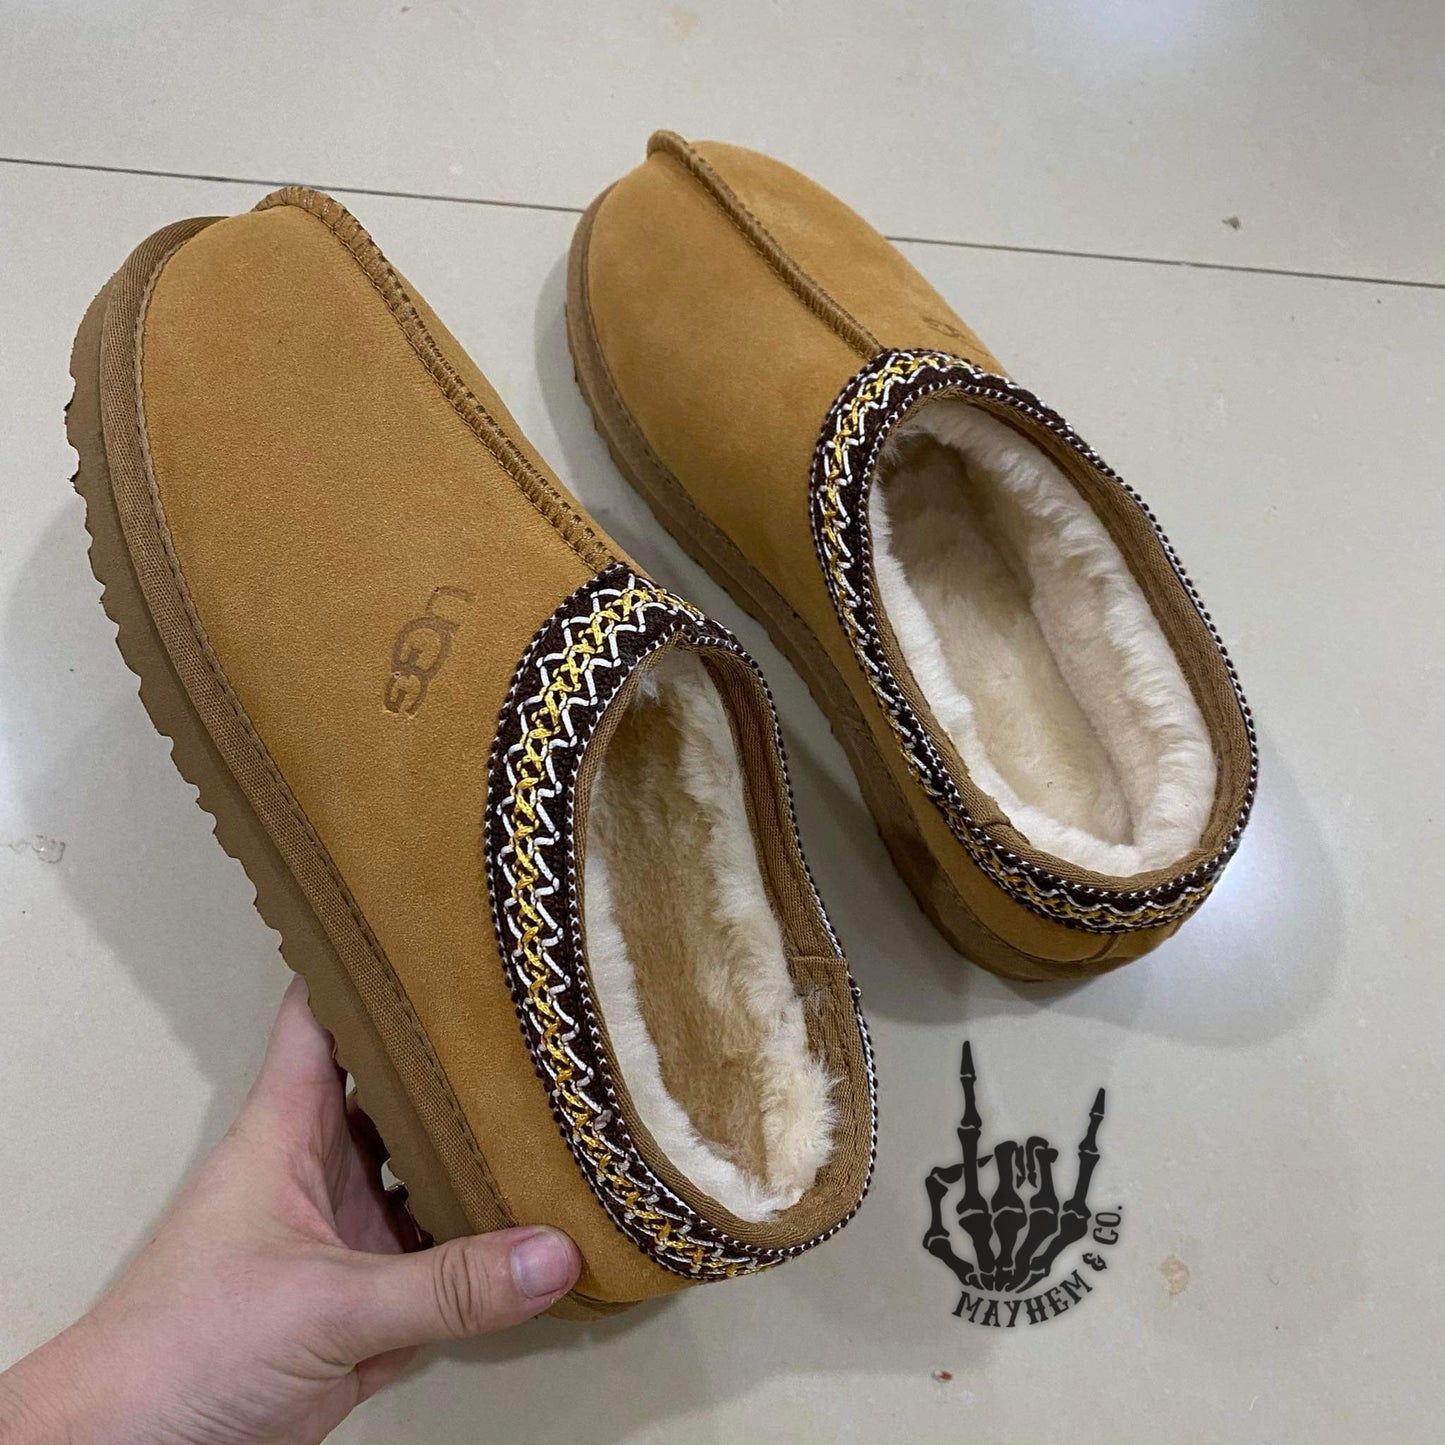 Viral U.GG slippers